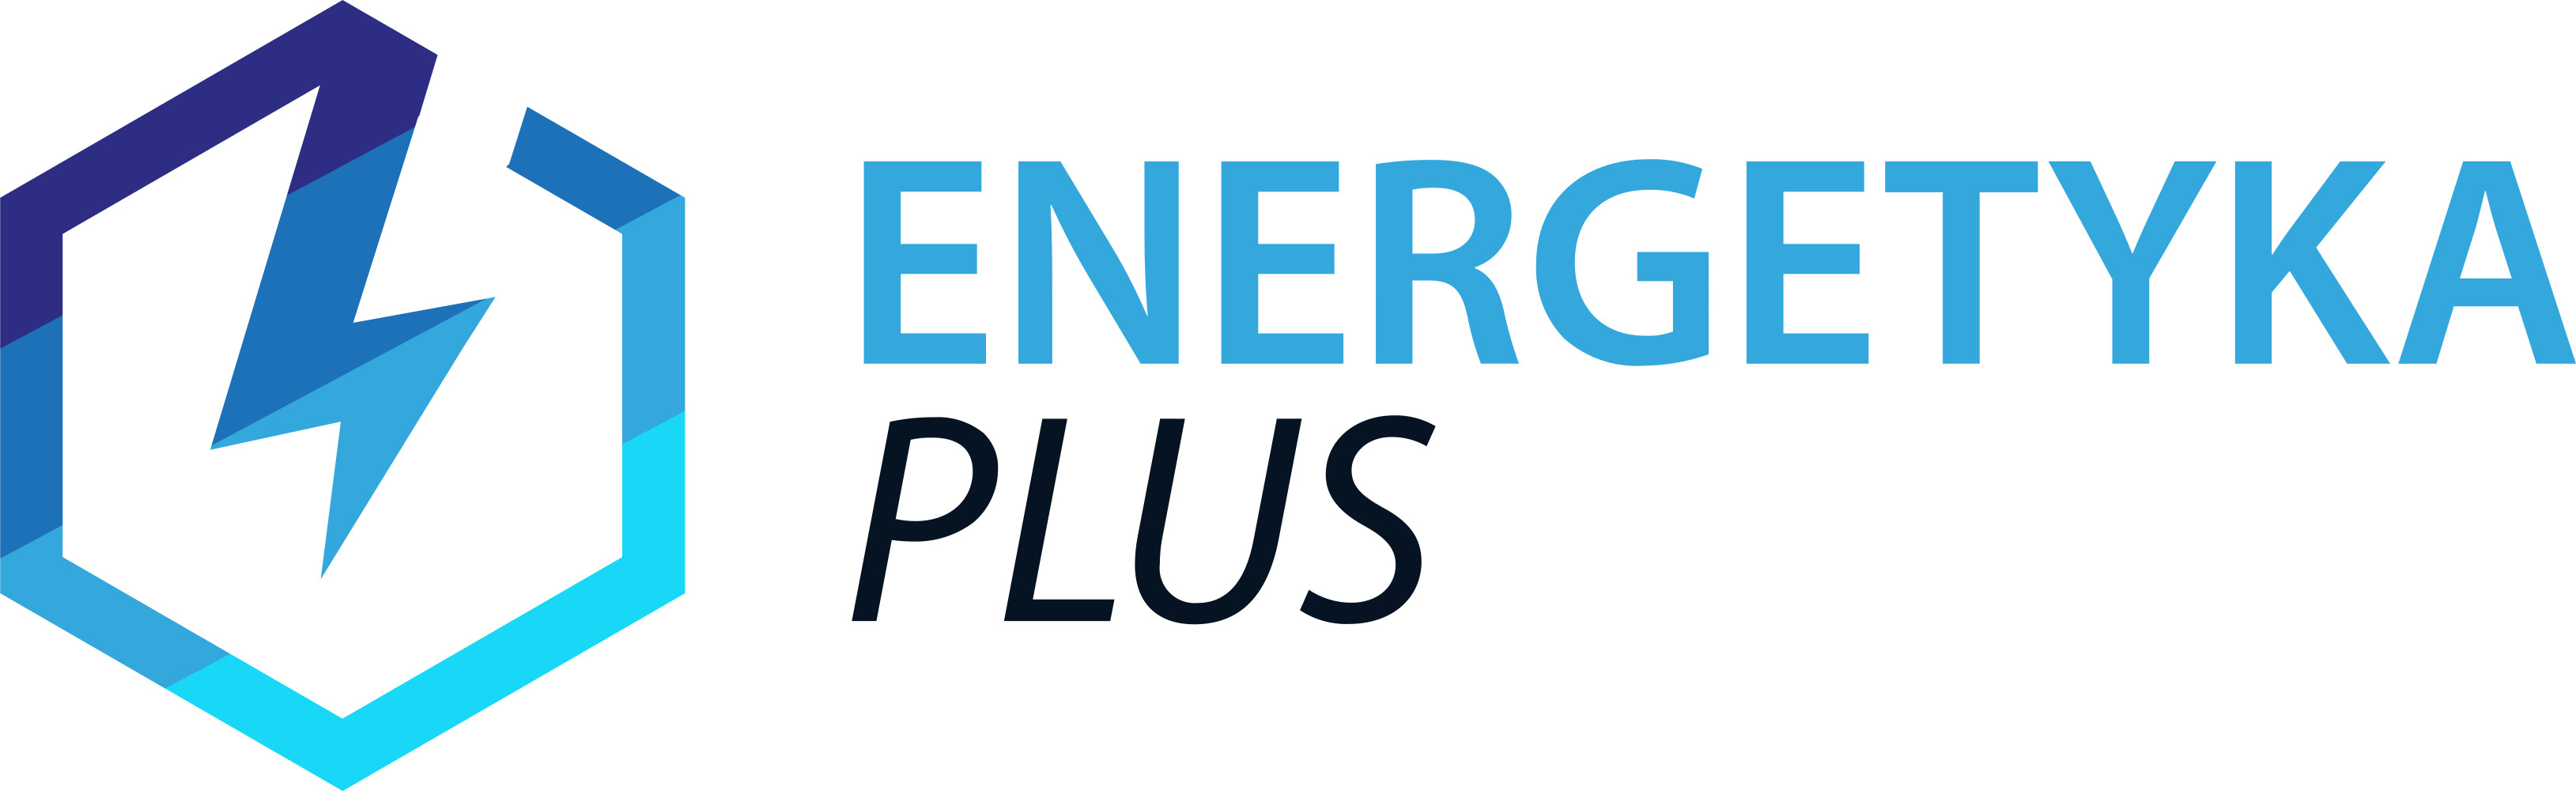 00_Energetyka_logo.jpg